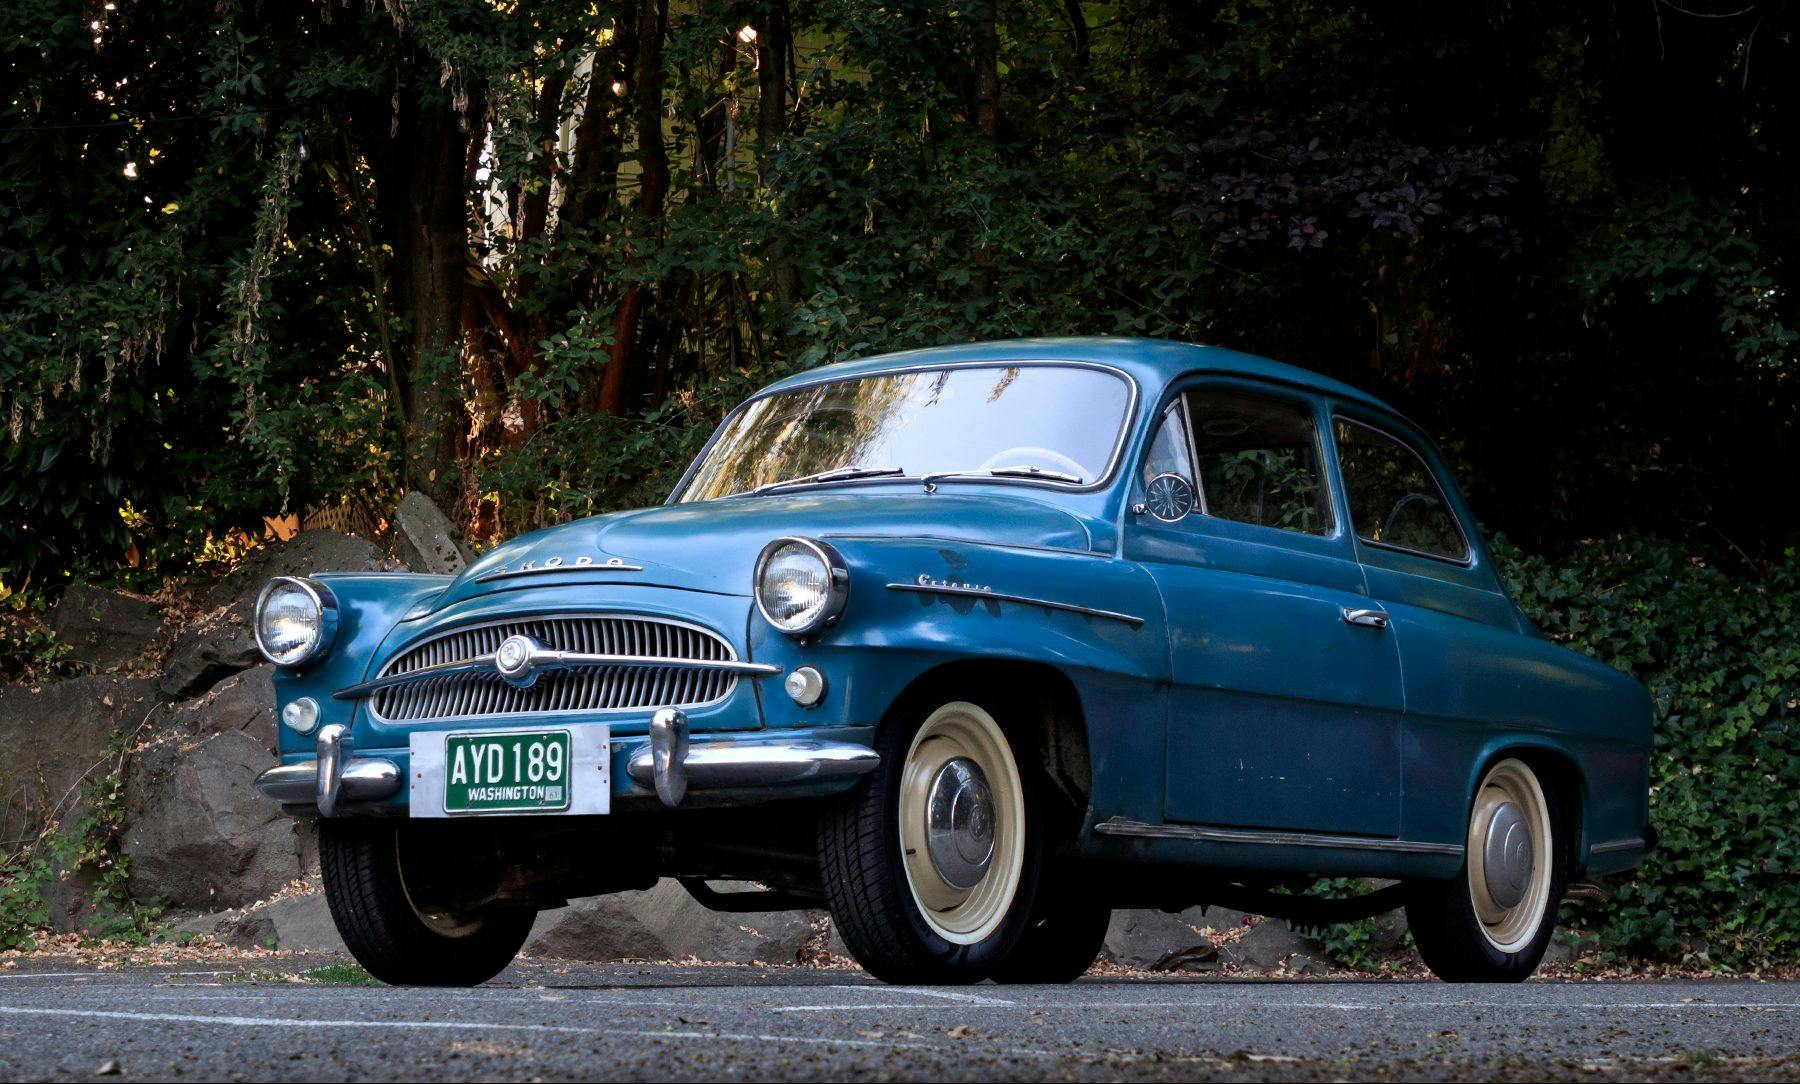 Restored 1960 Škoda Octavia testifies to Cold War culture clash